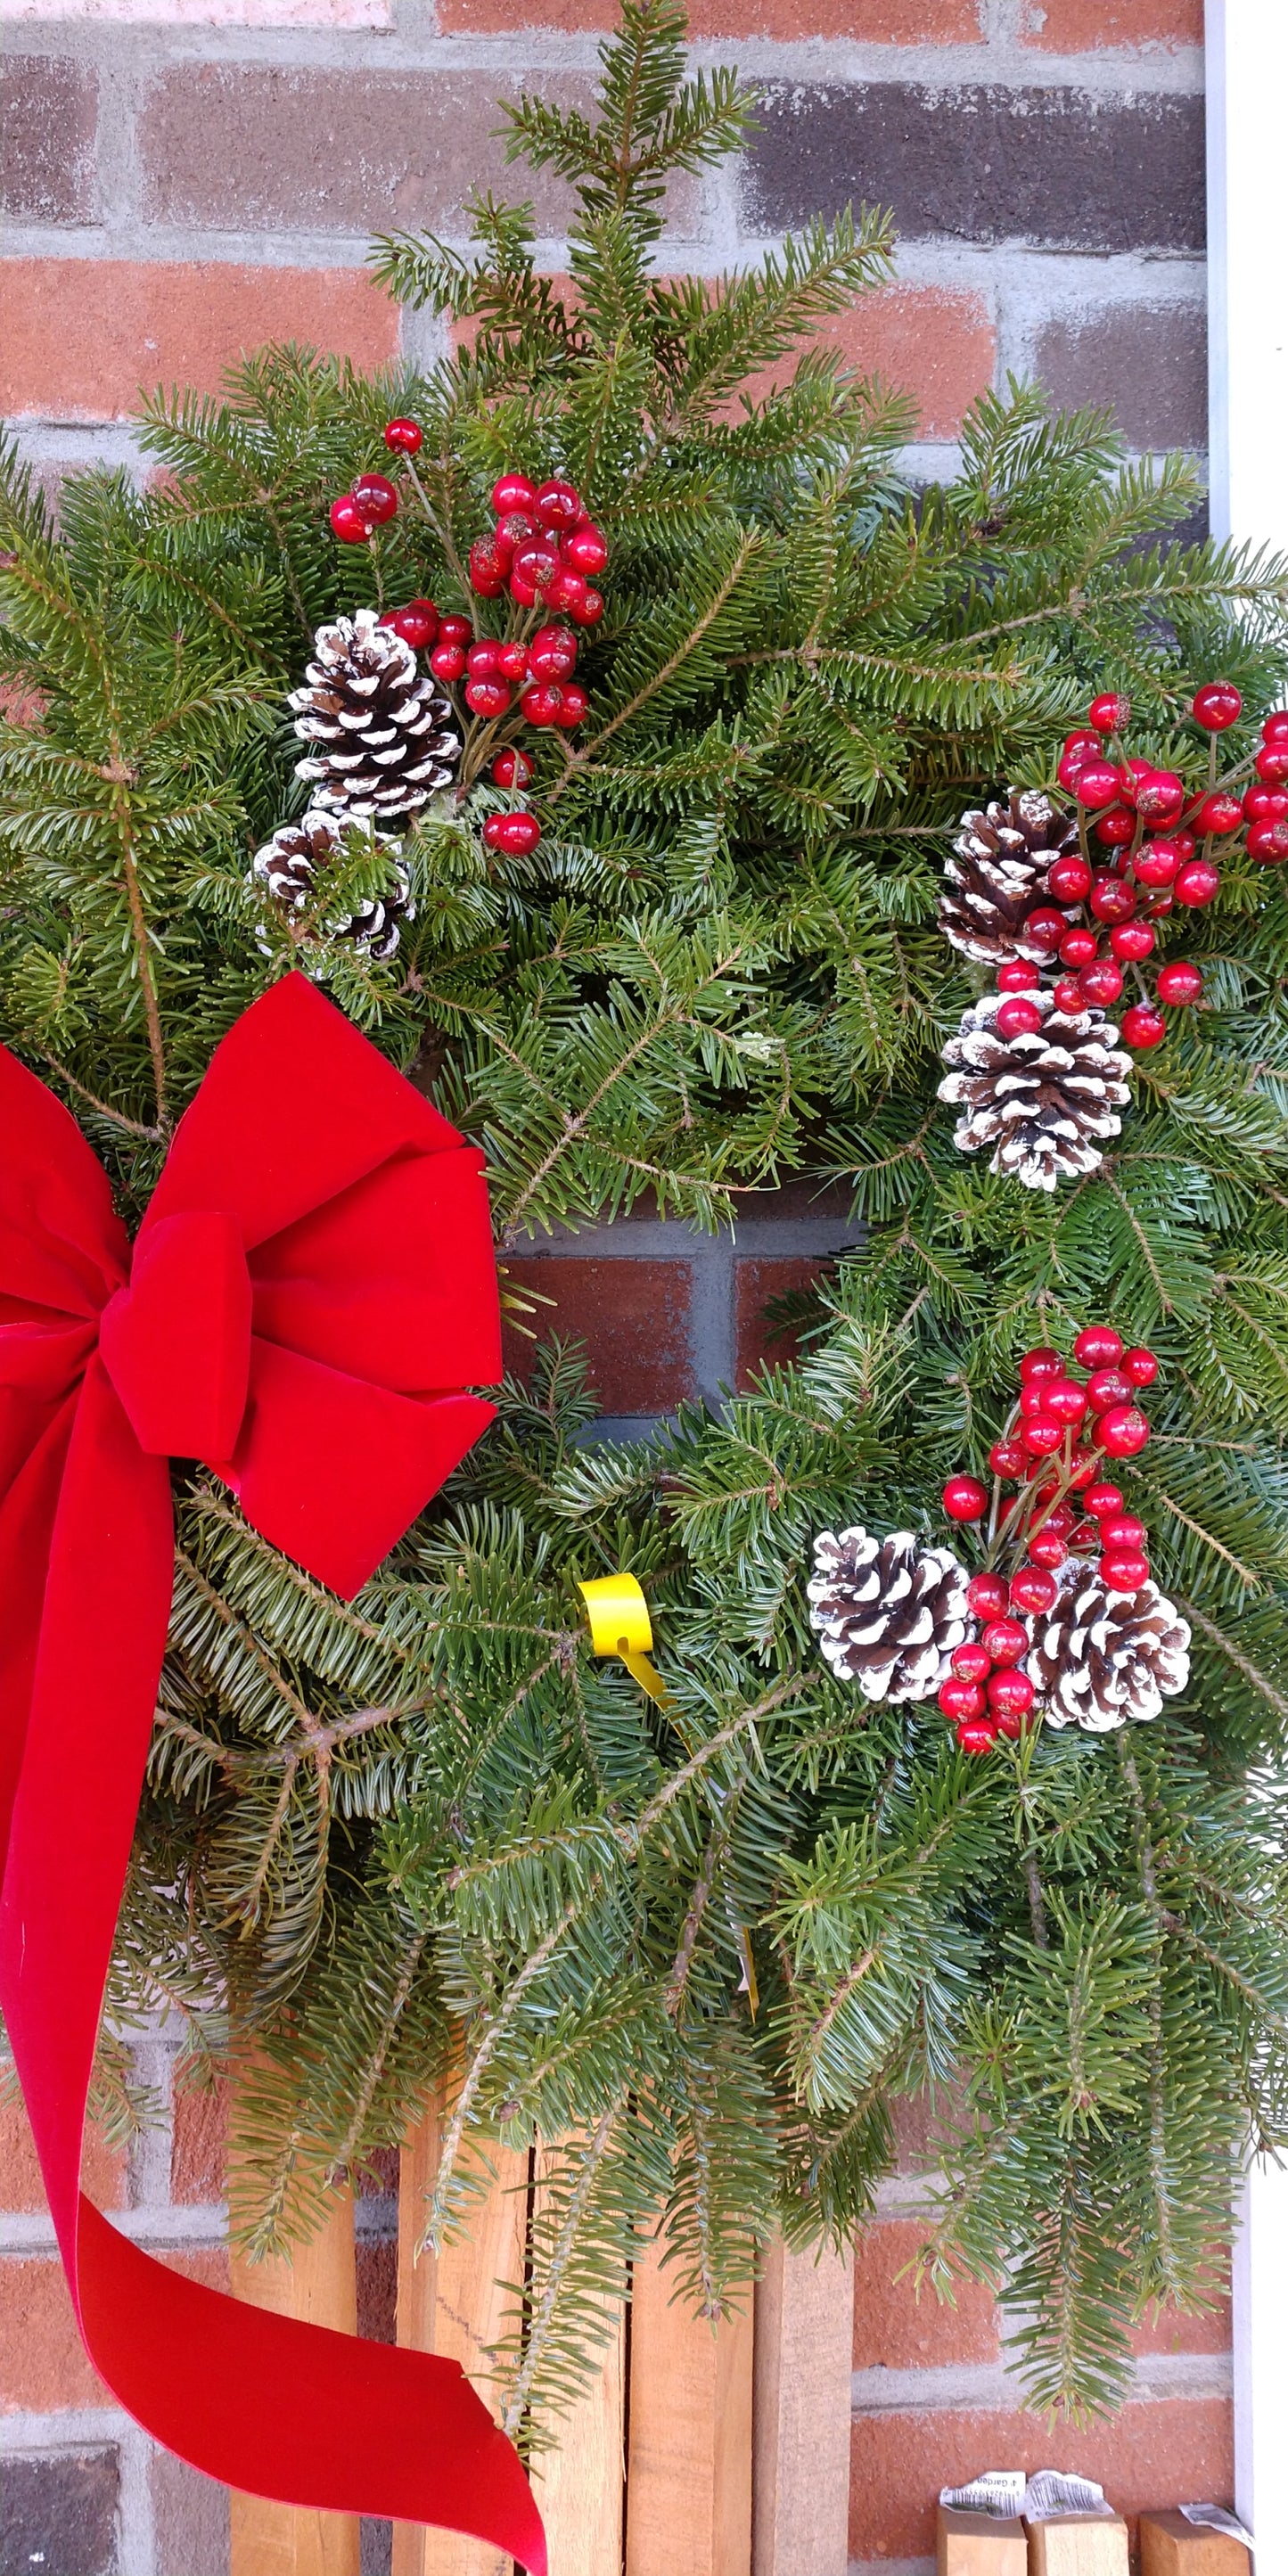 10" decorated wreath